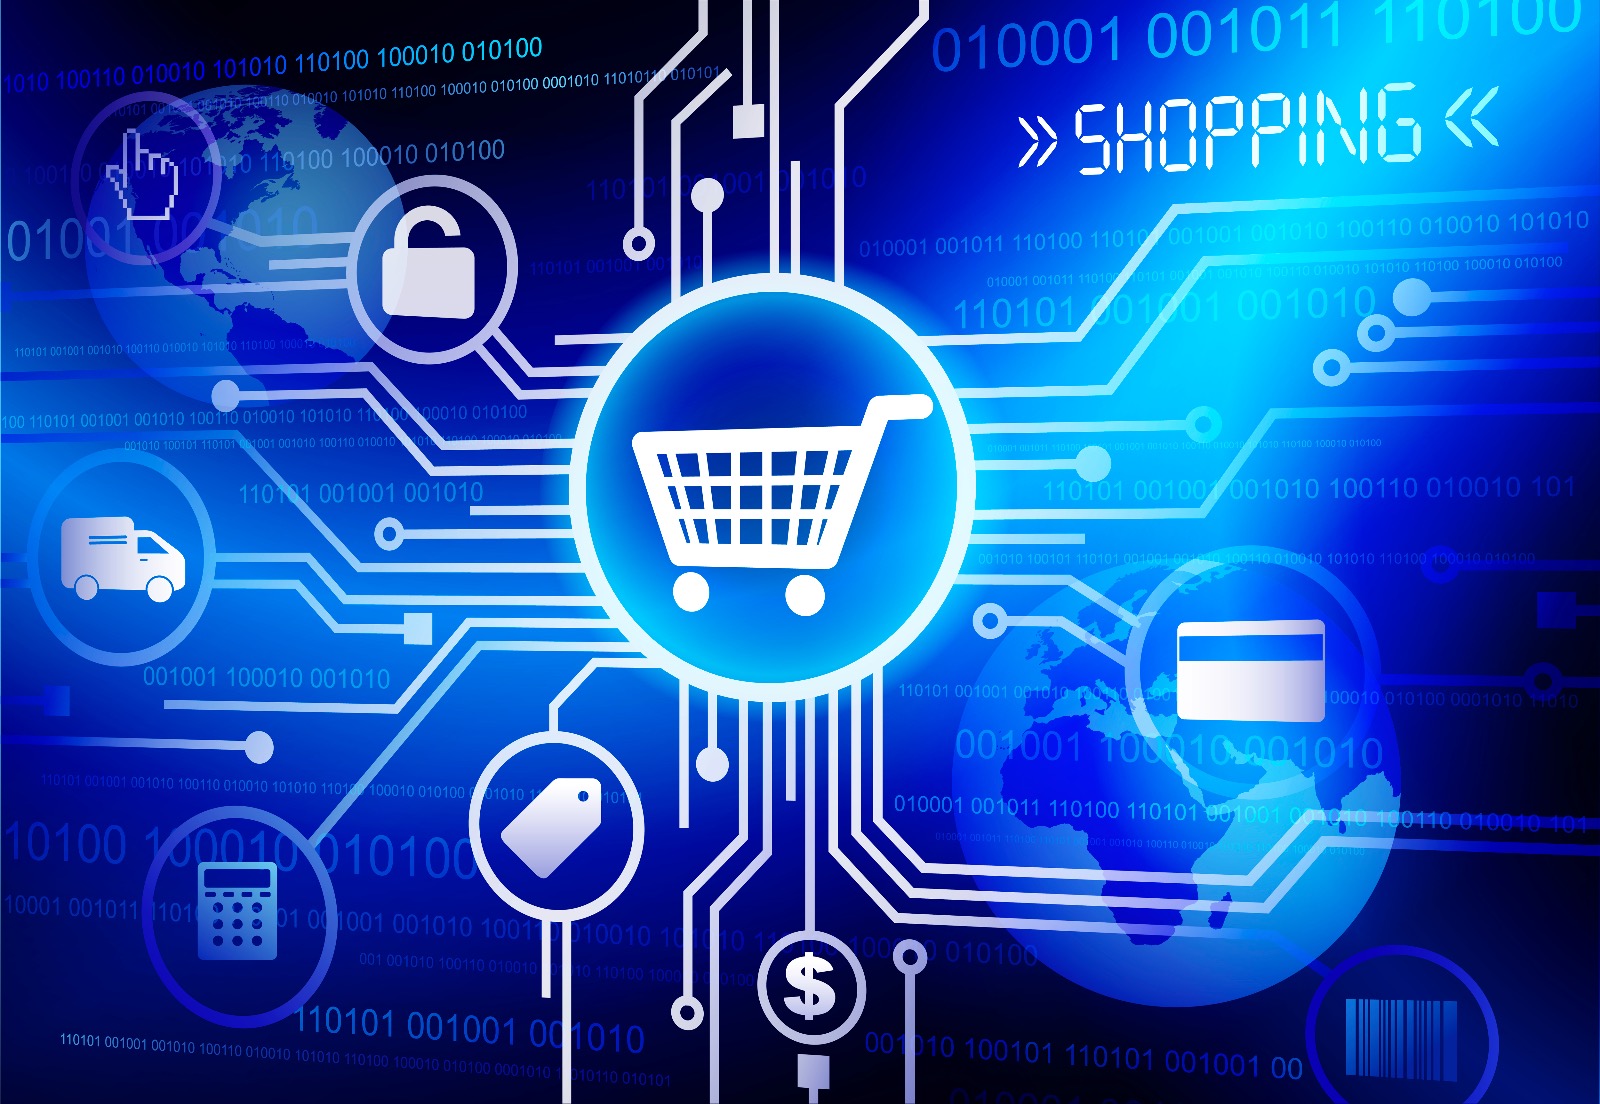 ¿Tu E-commerce está preparado para las e ventas de fin de año?